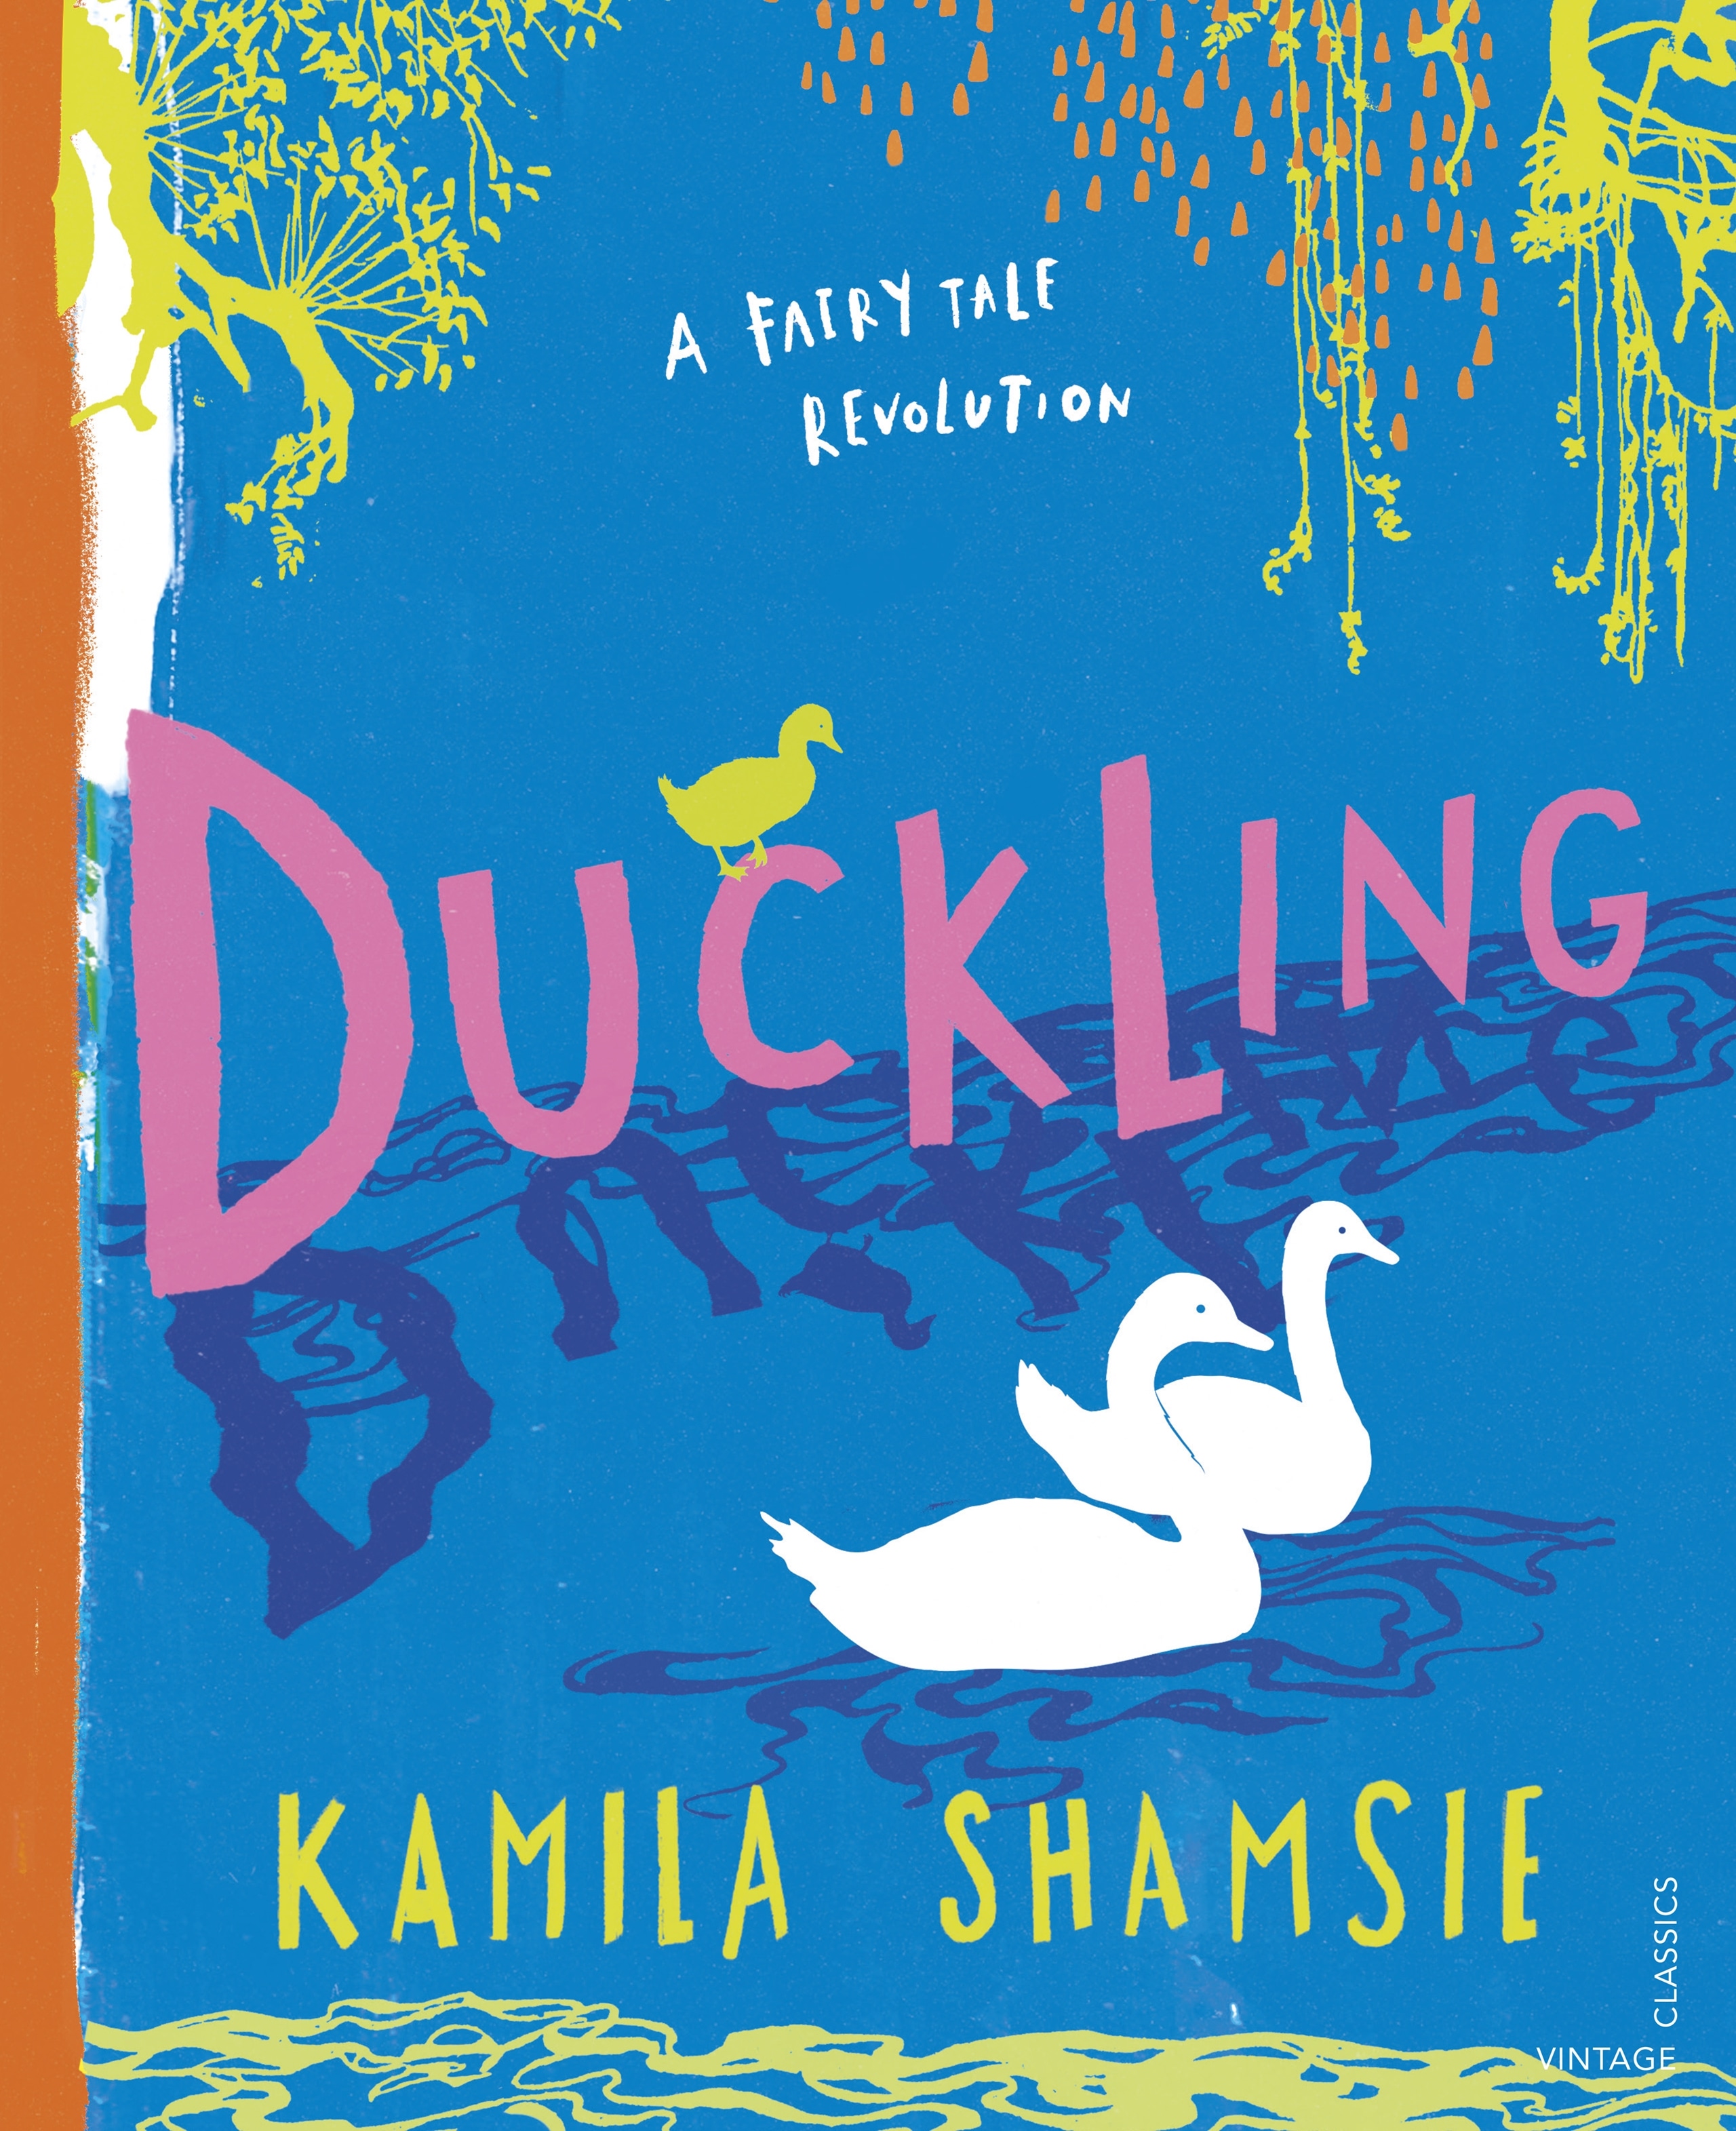 Book “Duckling” by Kamila Shamsie — October 1, 2020